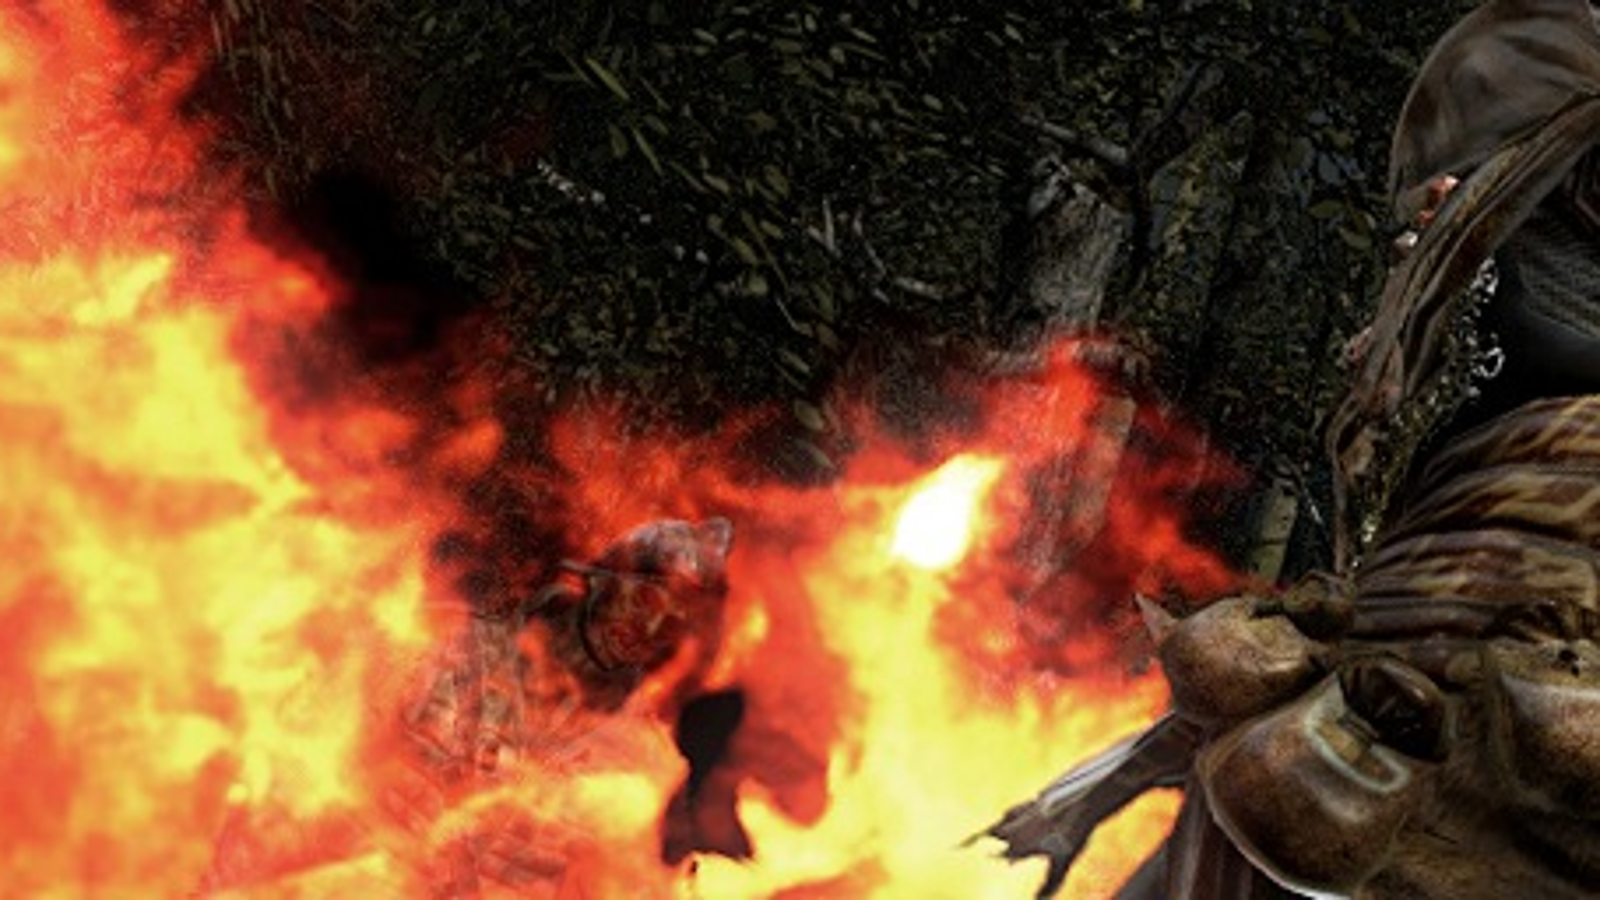 Forest Of The Fallen Giants (I), Walkthrough - Dark Souls II Game Guide &  Walkthrough